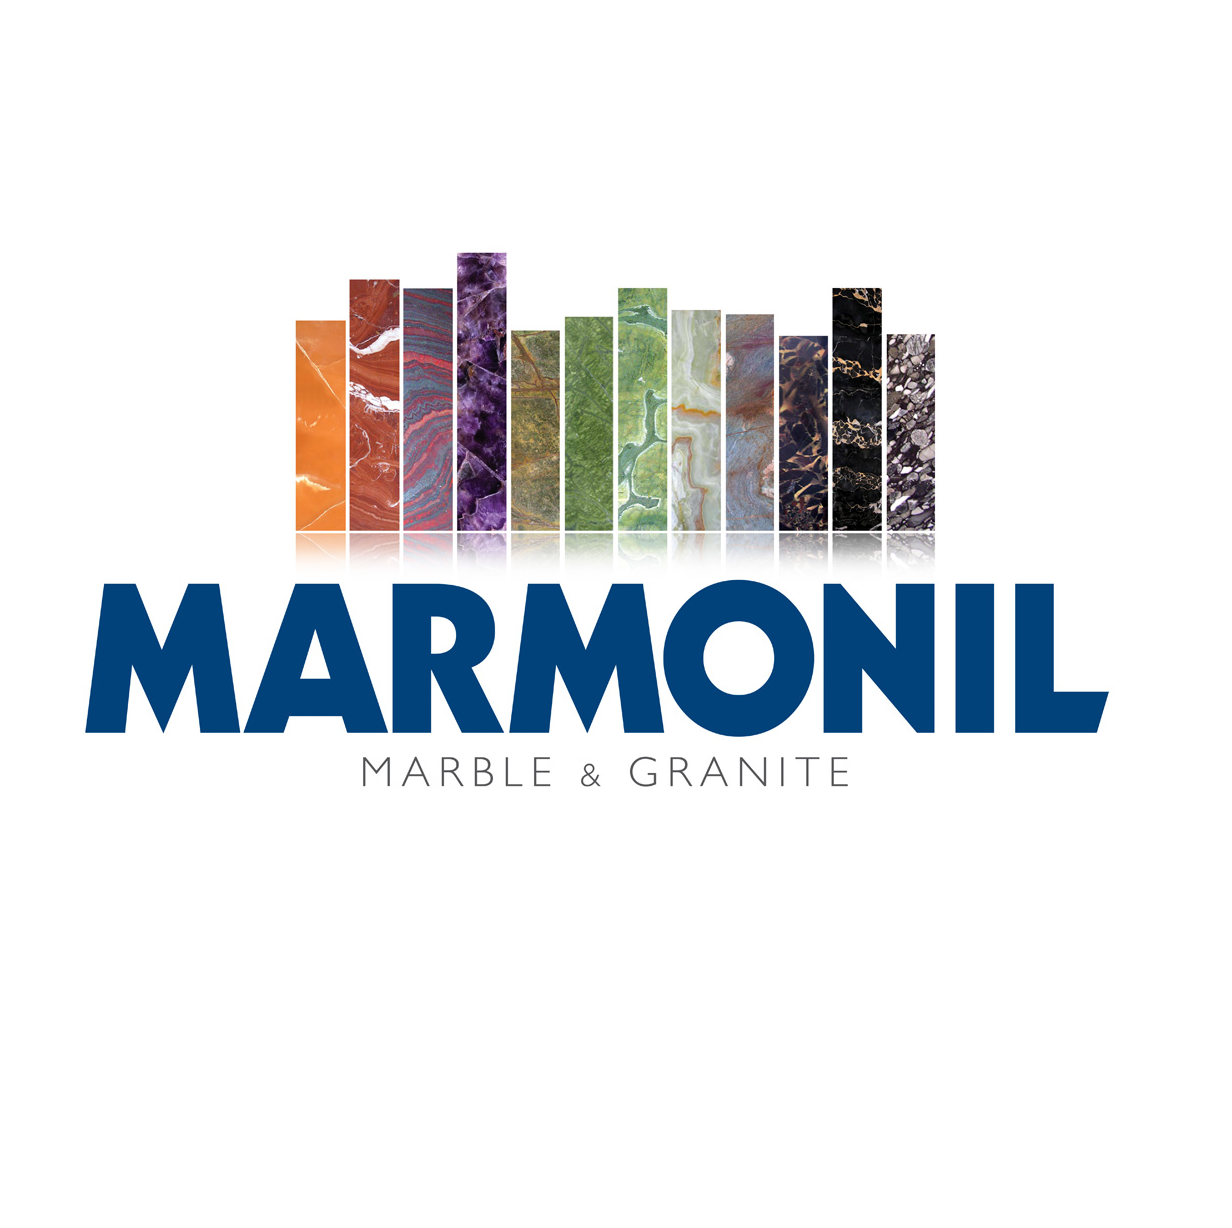 Marmonil